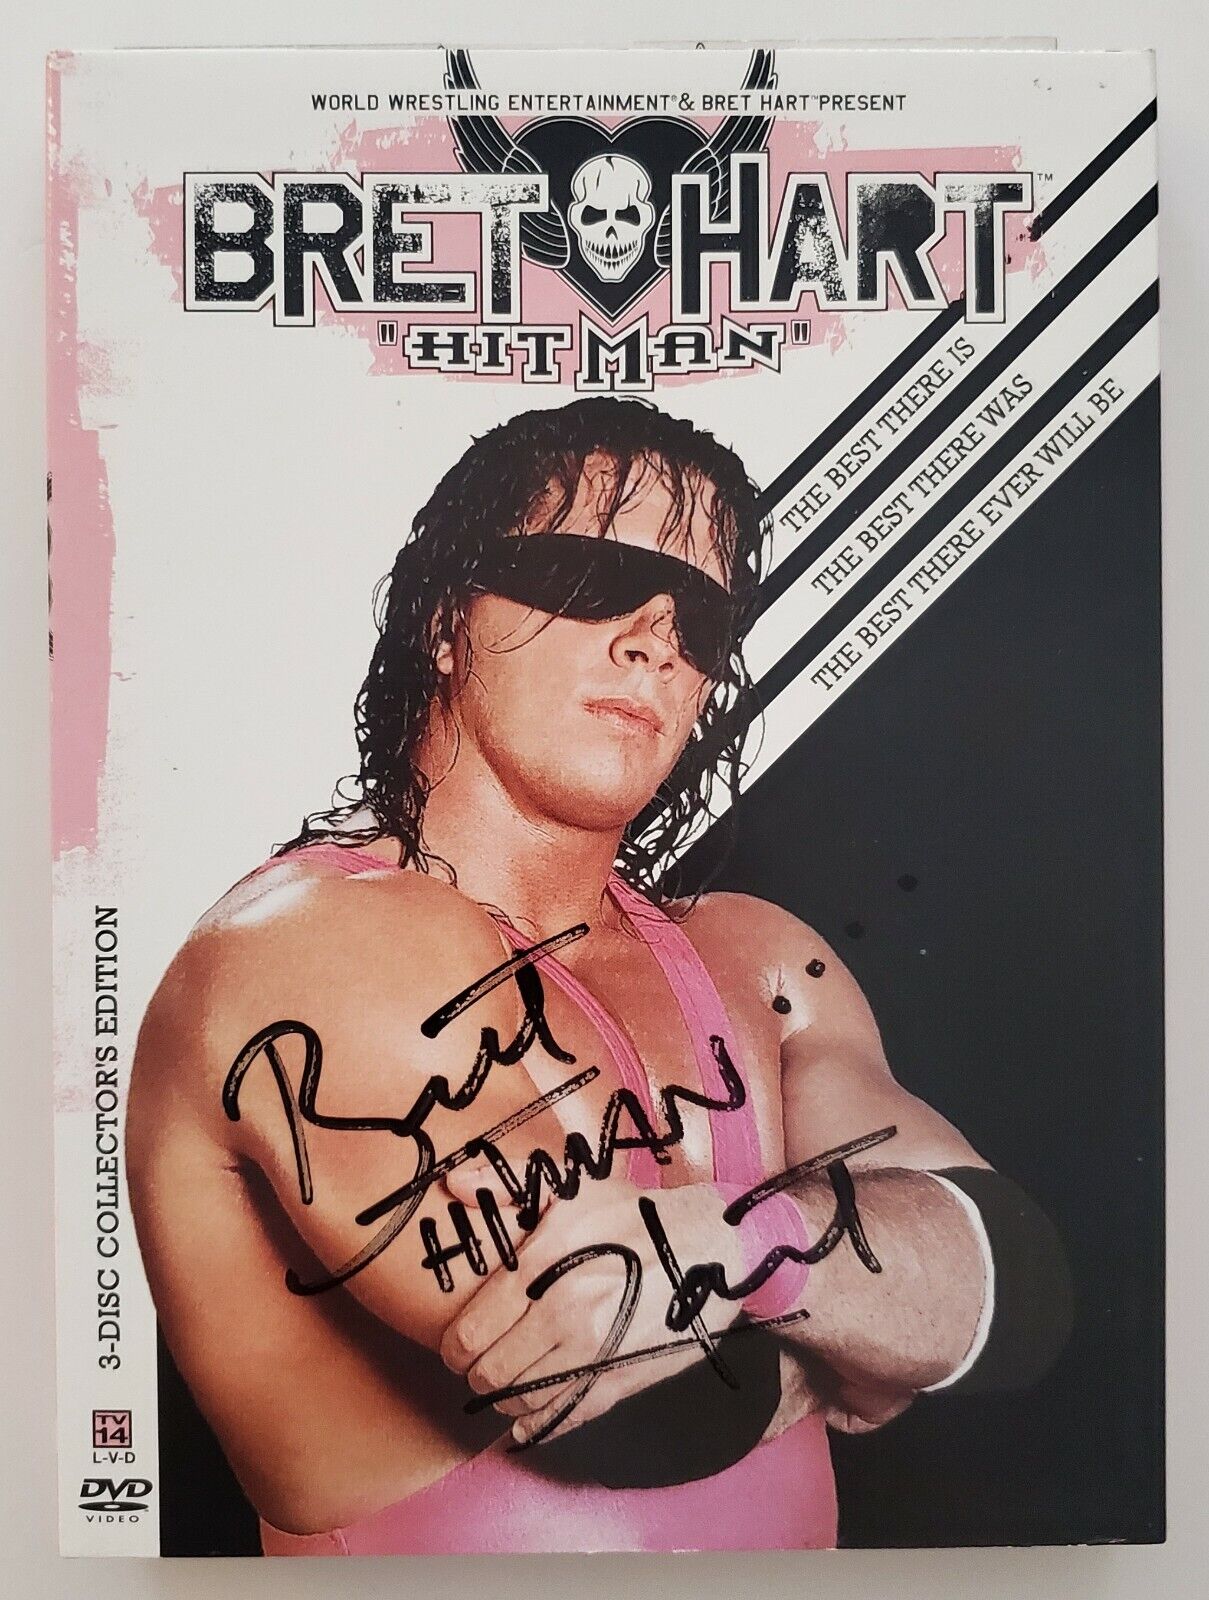 Bret The Hitman Hart Signed Best There Is Dvd Wwe Wwf Hof Legend Rad